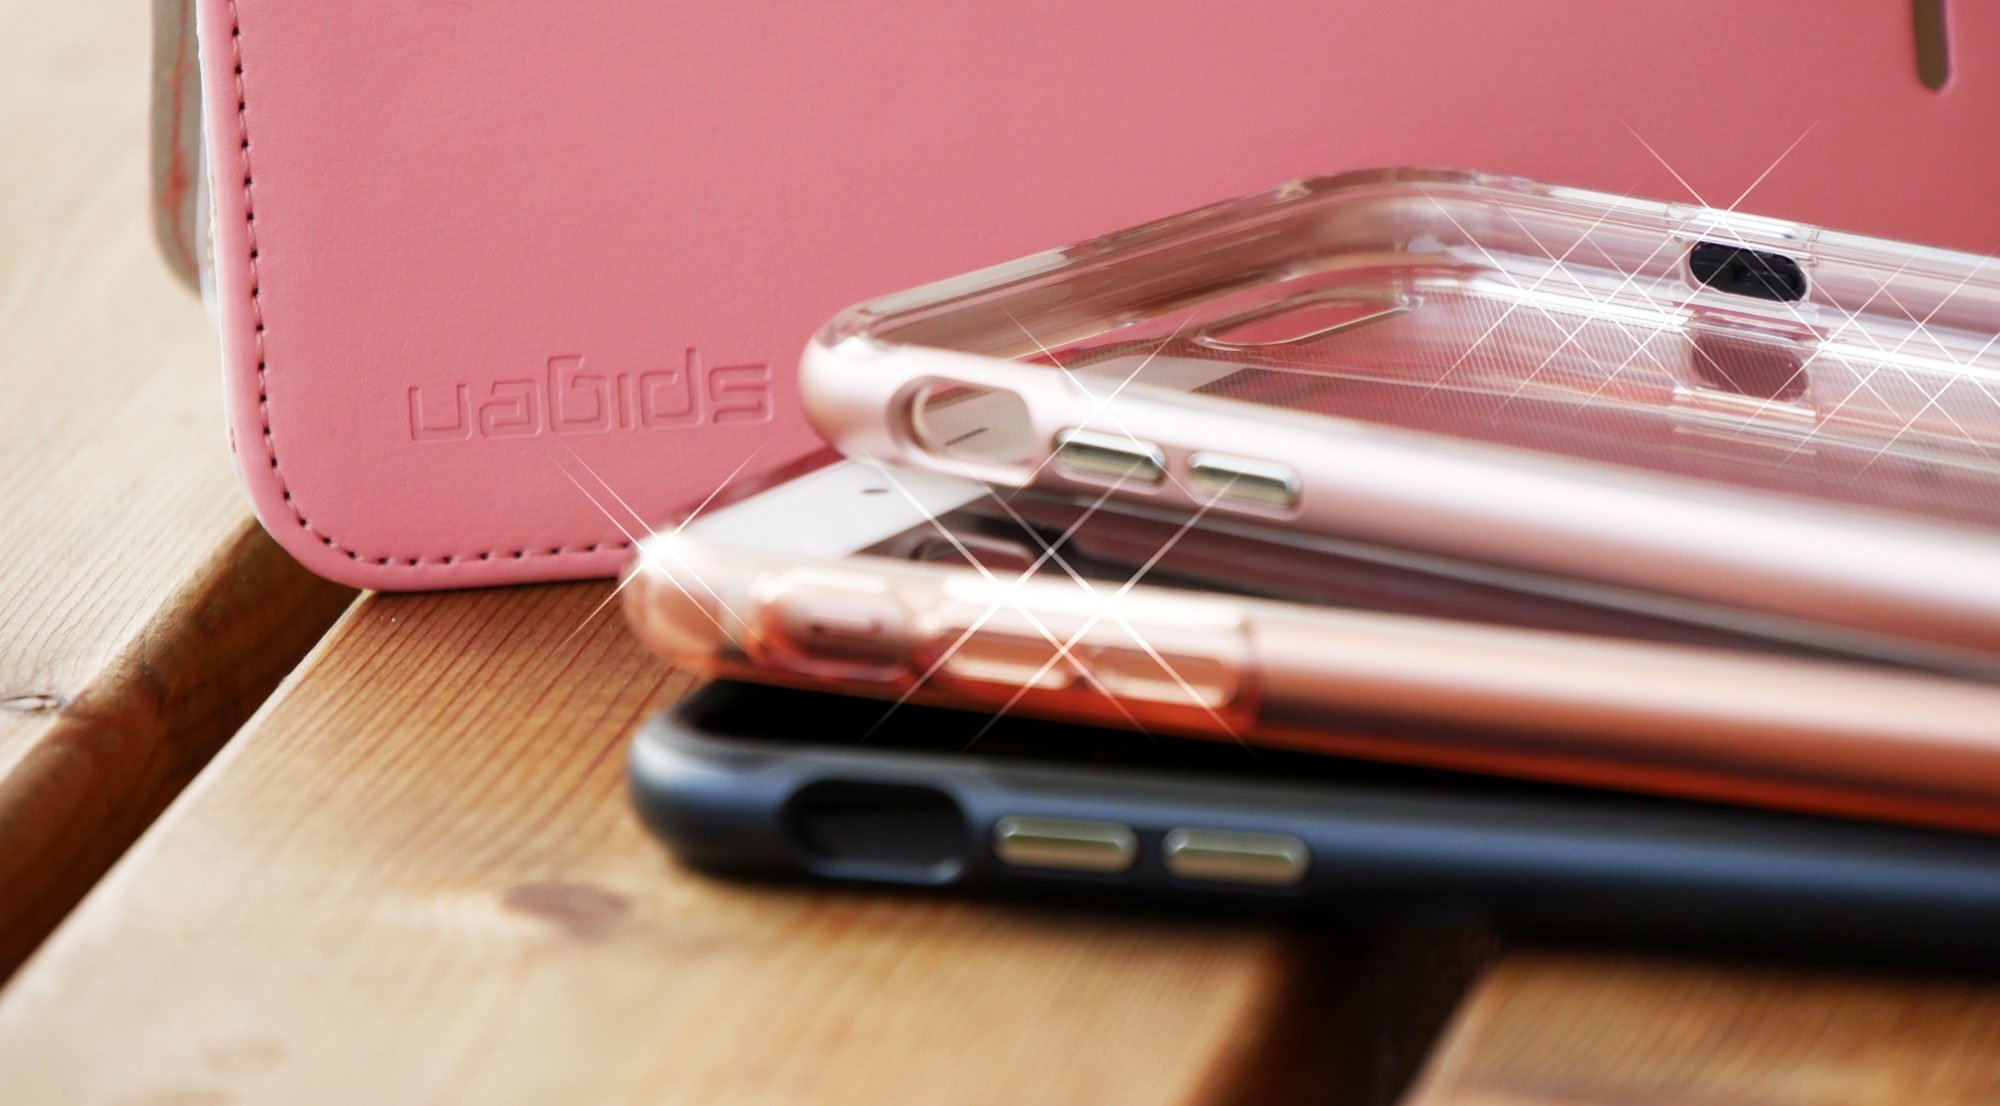 iPhone 6s Hüllen-Test: die besten Cases & Schutzhüllen fürs iPhone 6s & iPhone 6s Plus 13